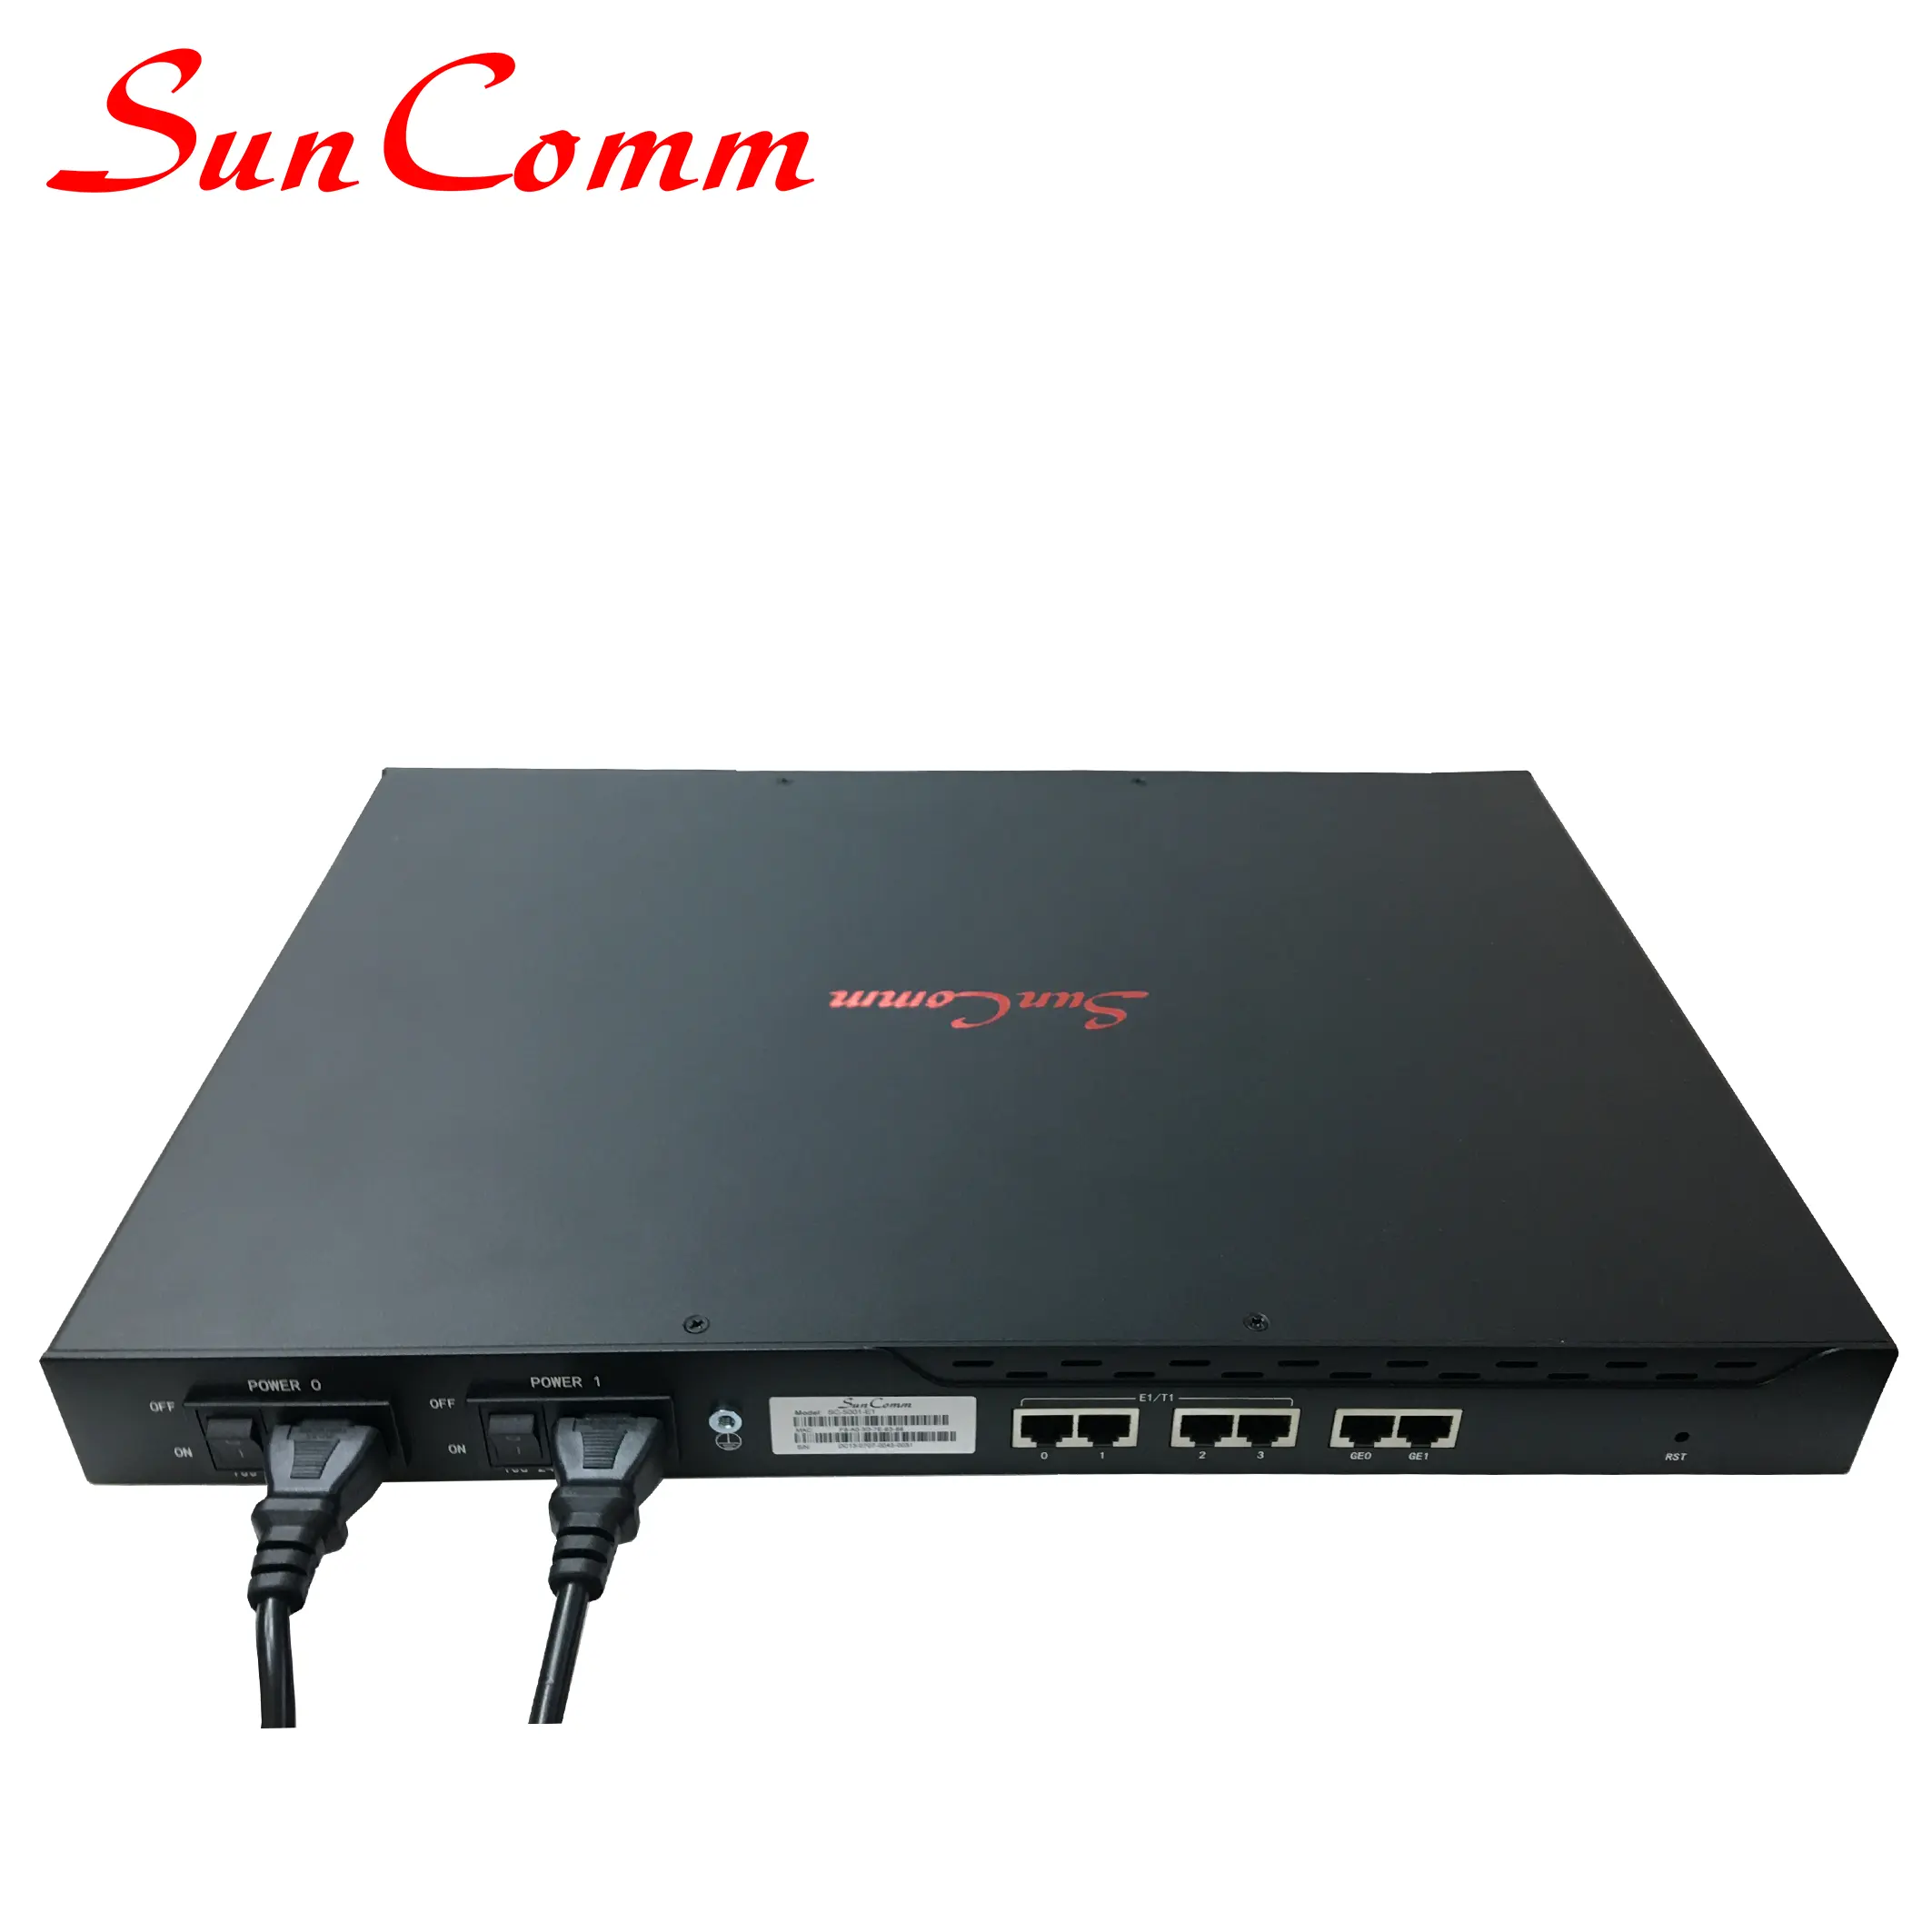 Puerta de enlace troncal SIP de 1 puerto Digital VoIP de SunComm con puerto E1 o T1.